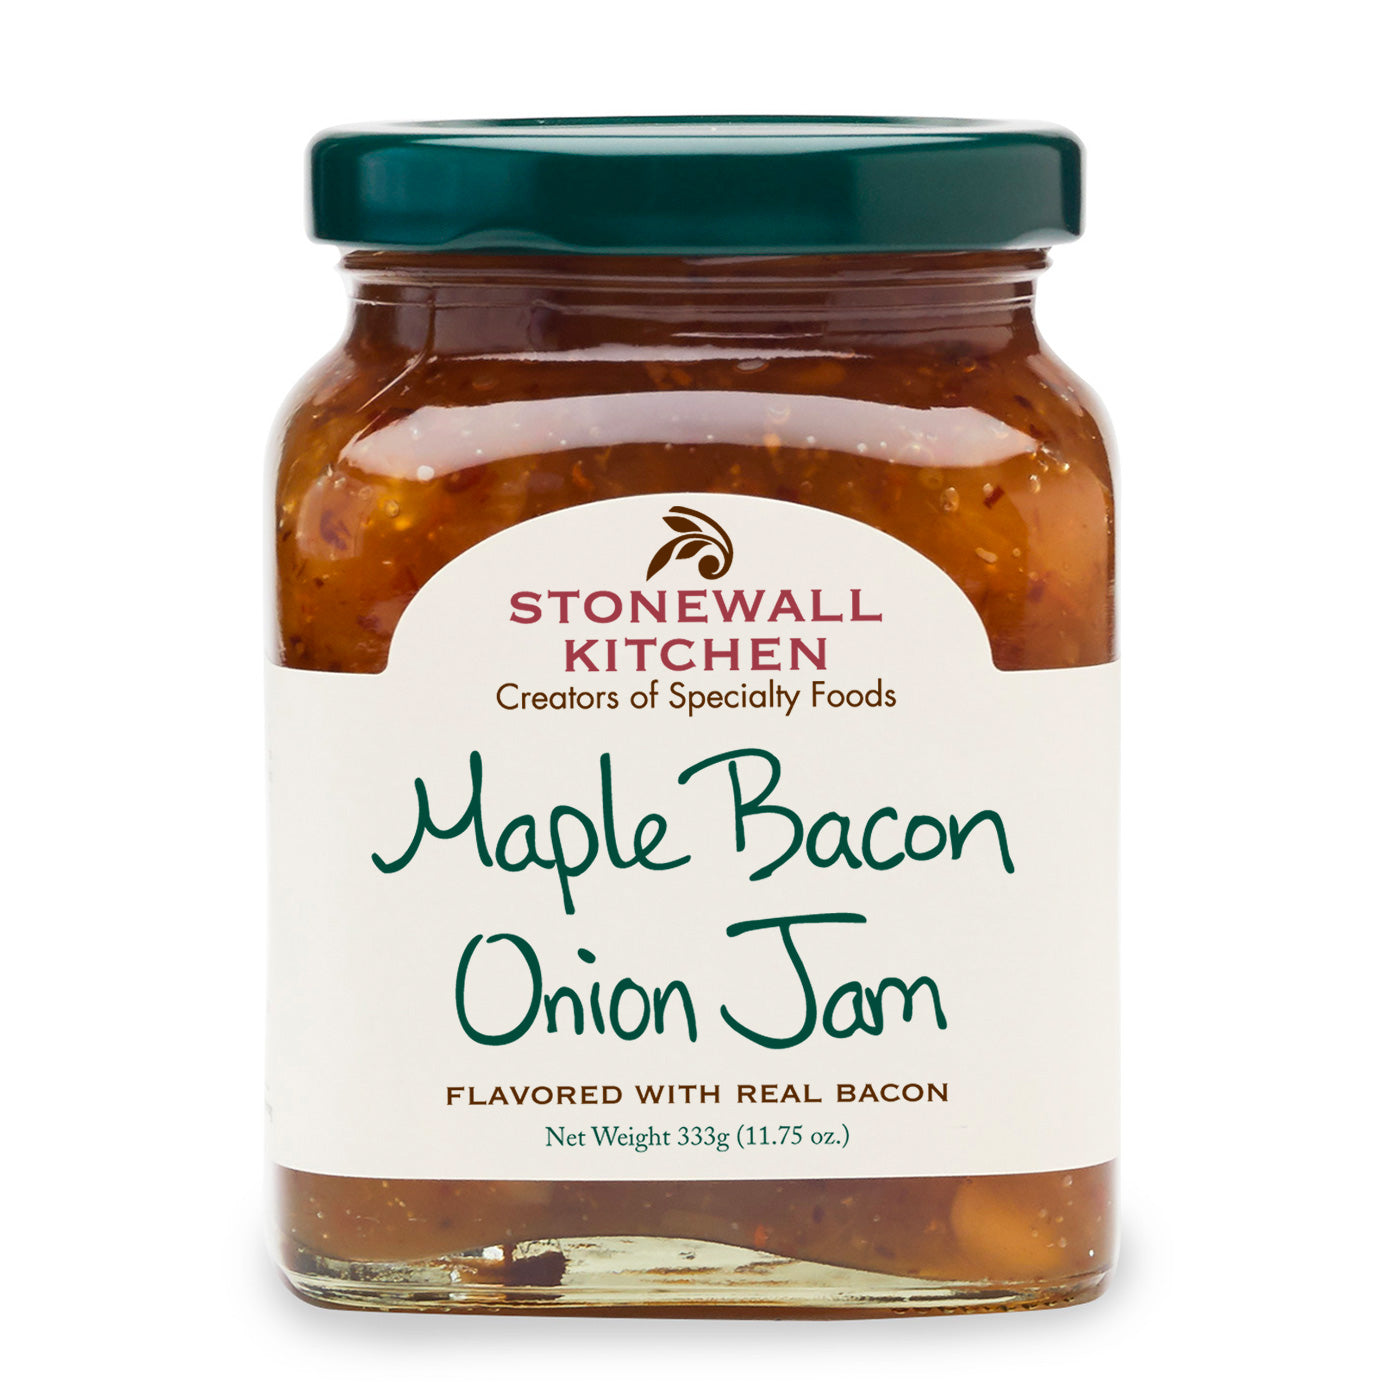 Stonewall Kitchen Maple Bacon Onion Jam - Olive Oil Etcetera 